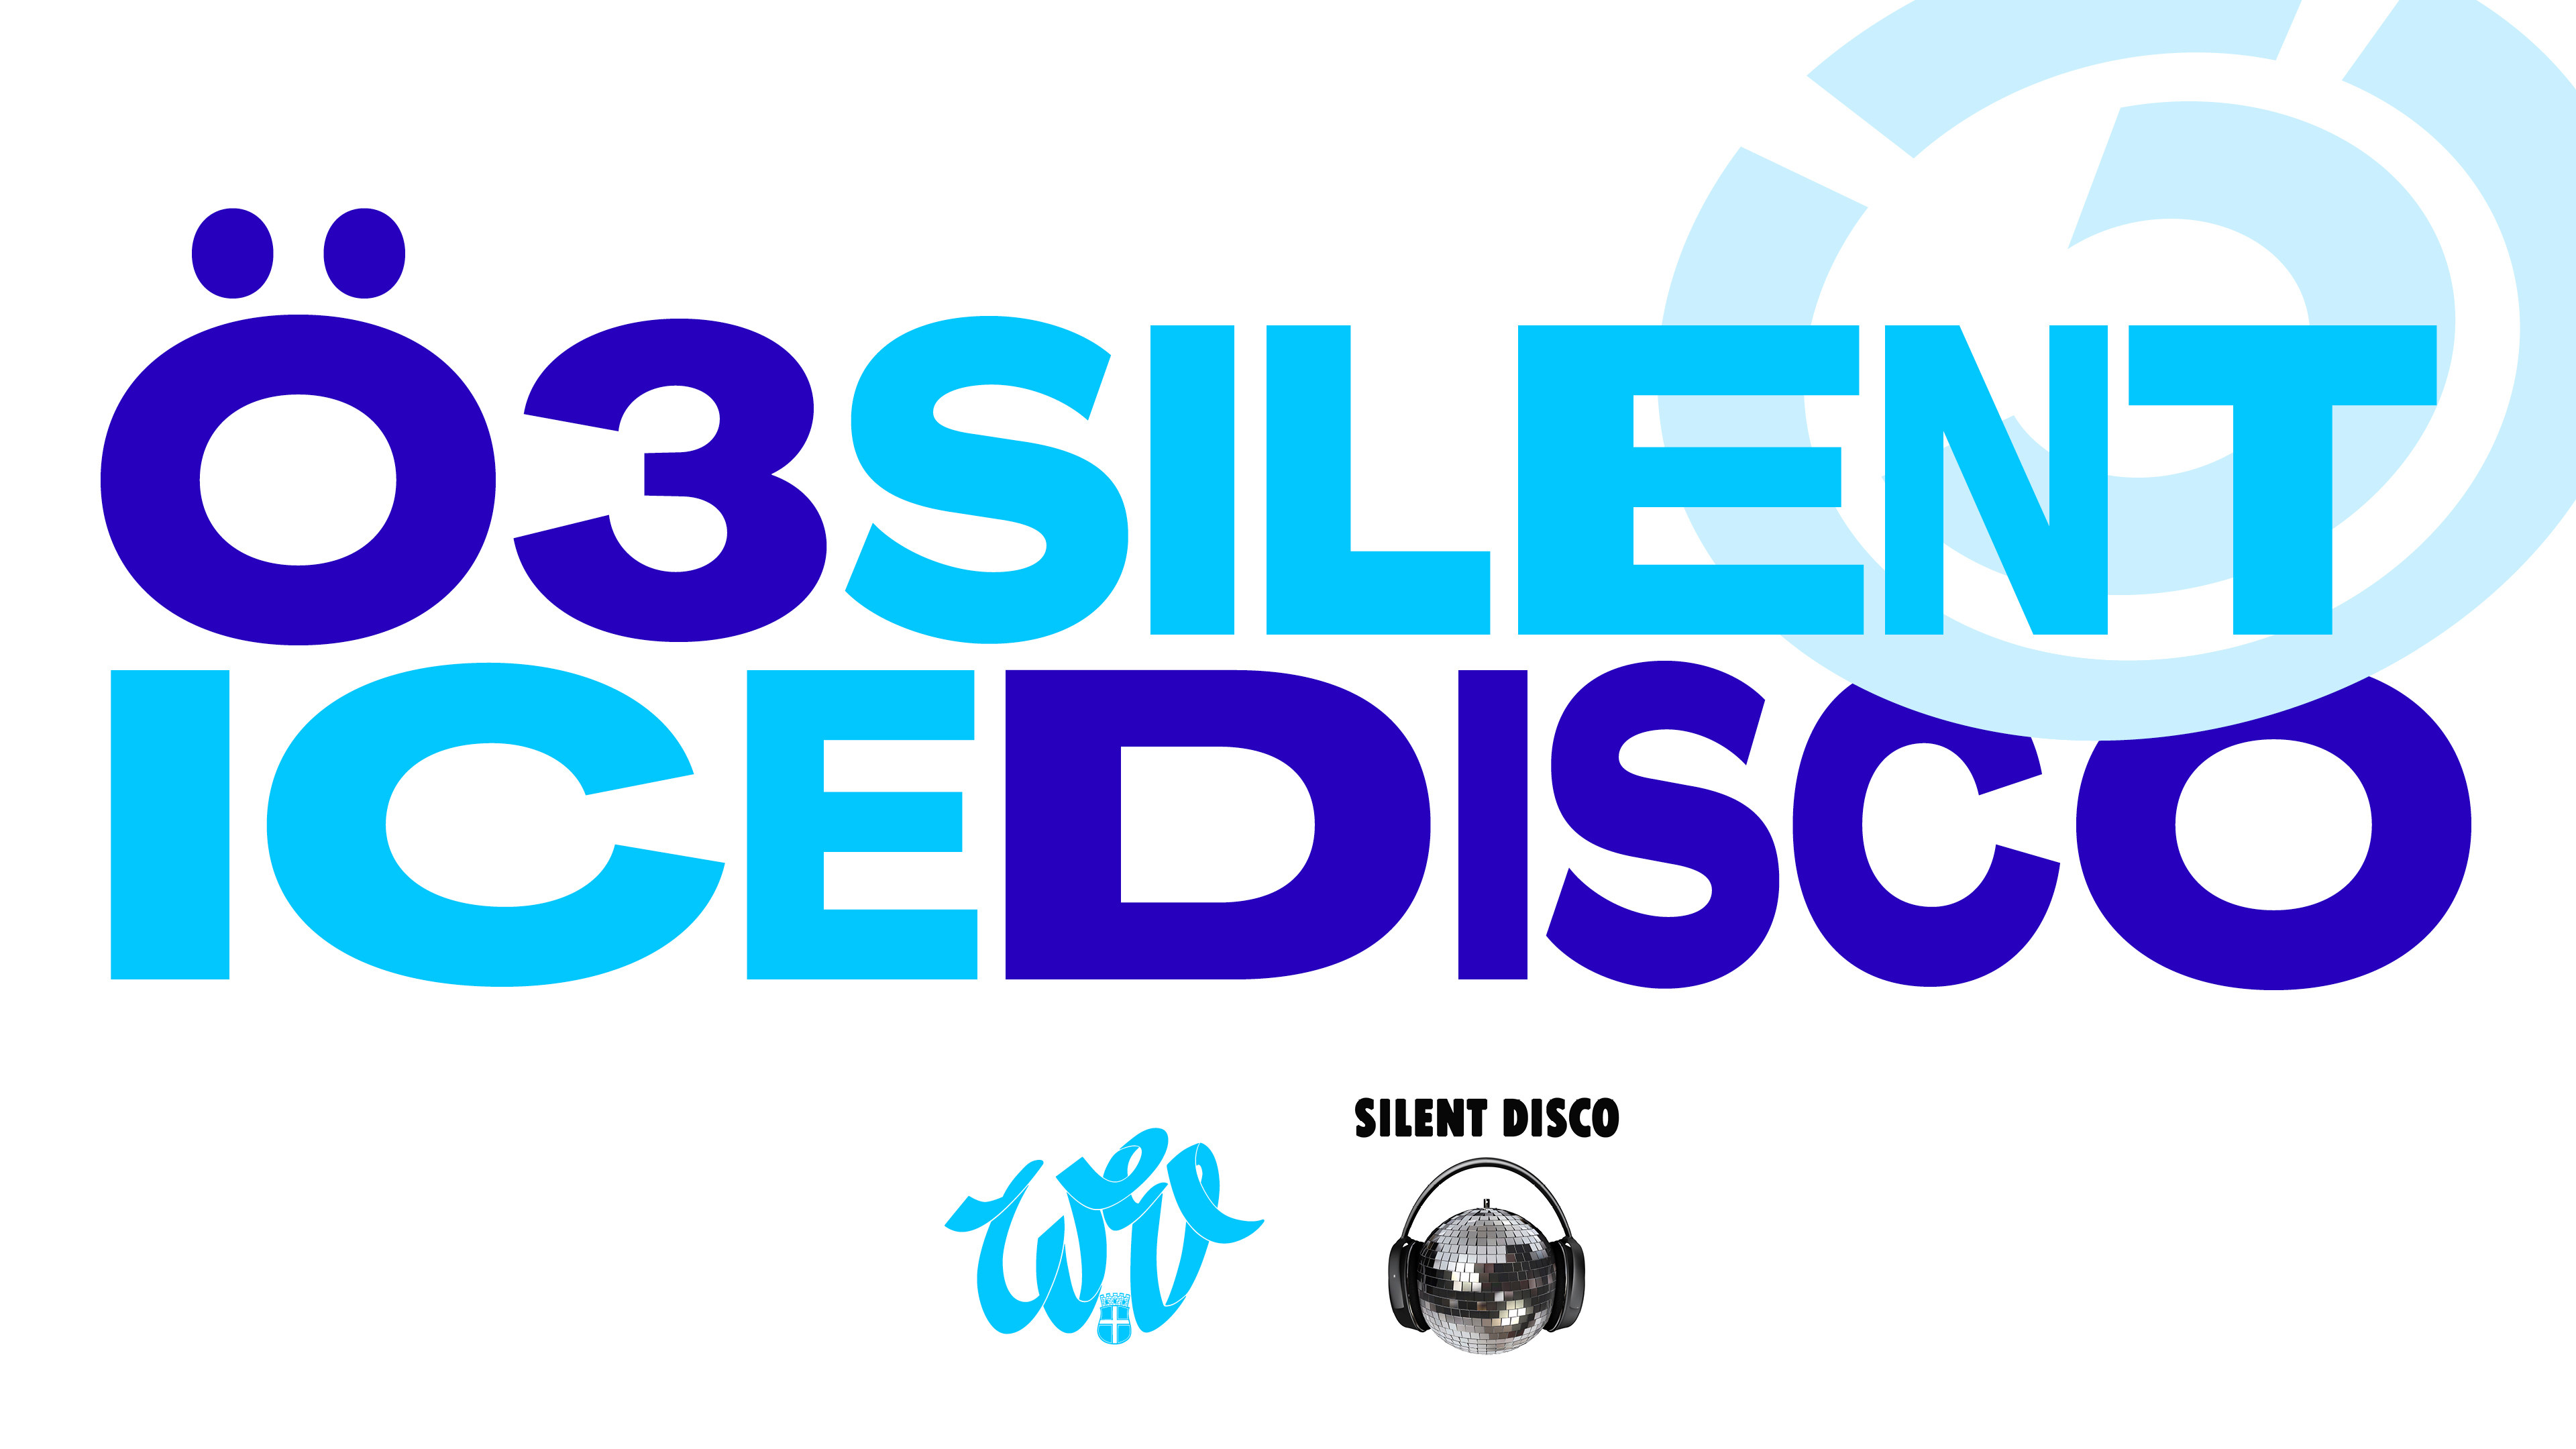 Ö3 Silent Disco